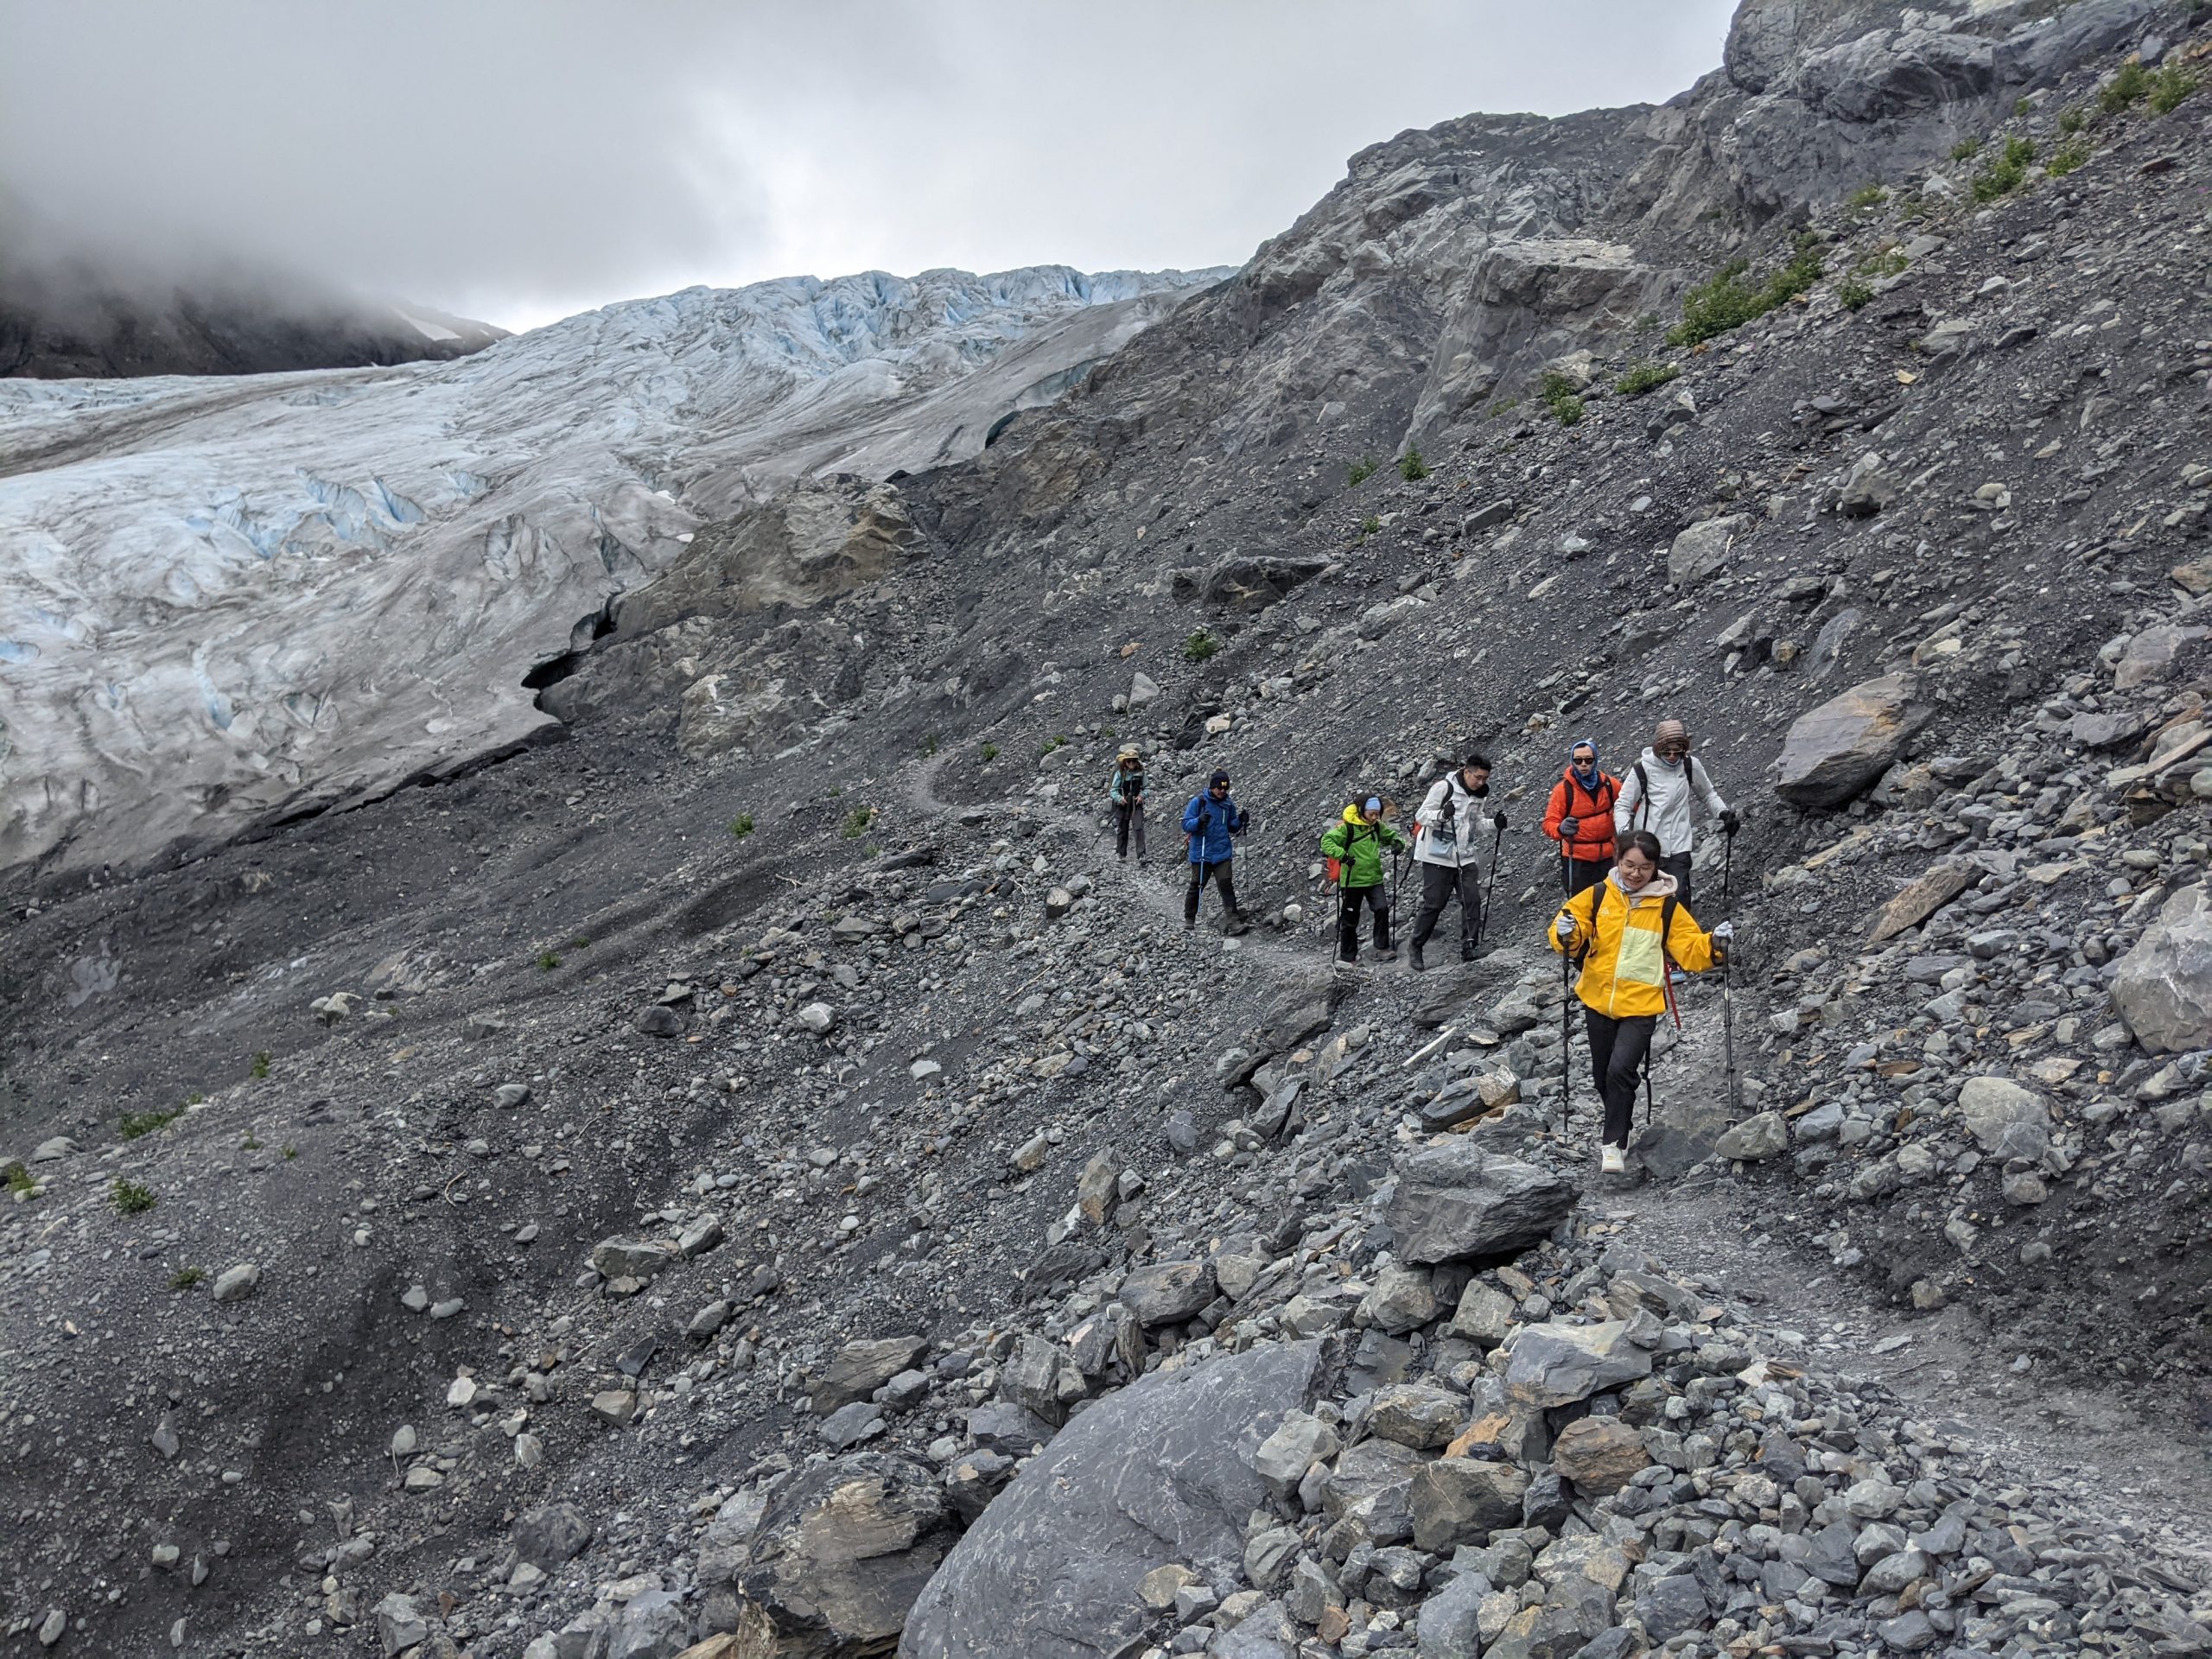 TRIP REPORT: 7/12/22 Exit Glacier Ice Hiking Adventure